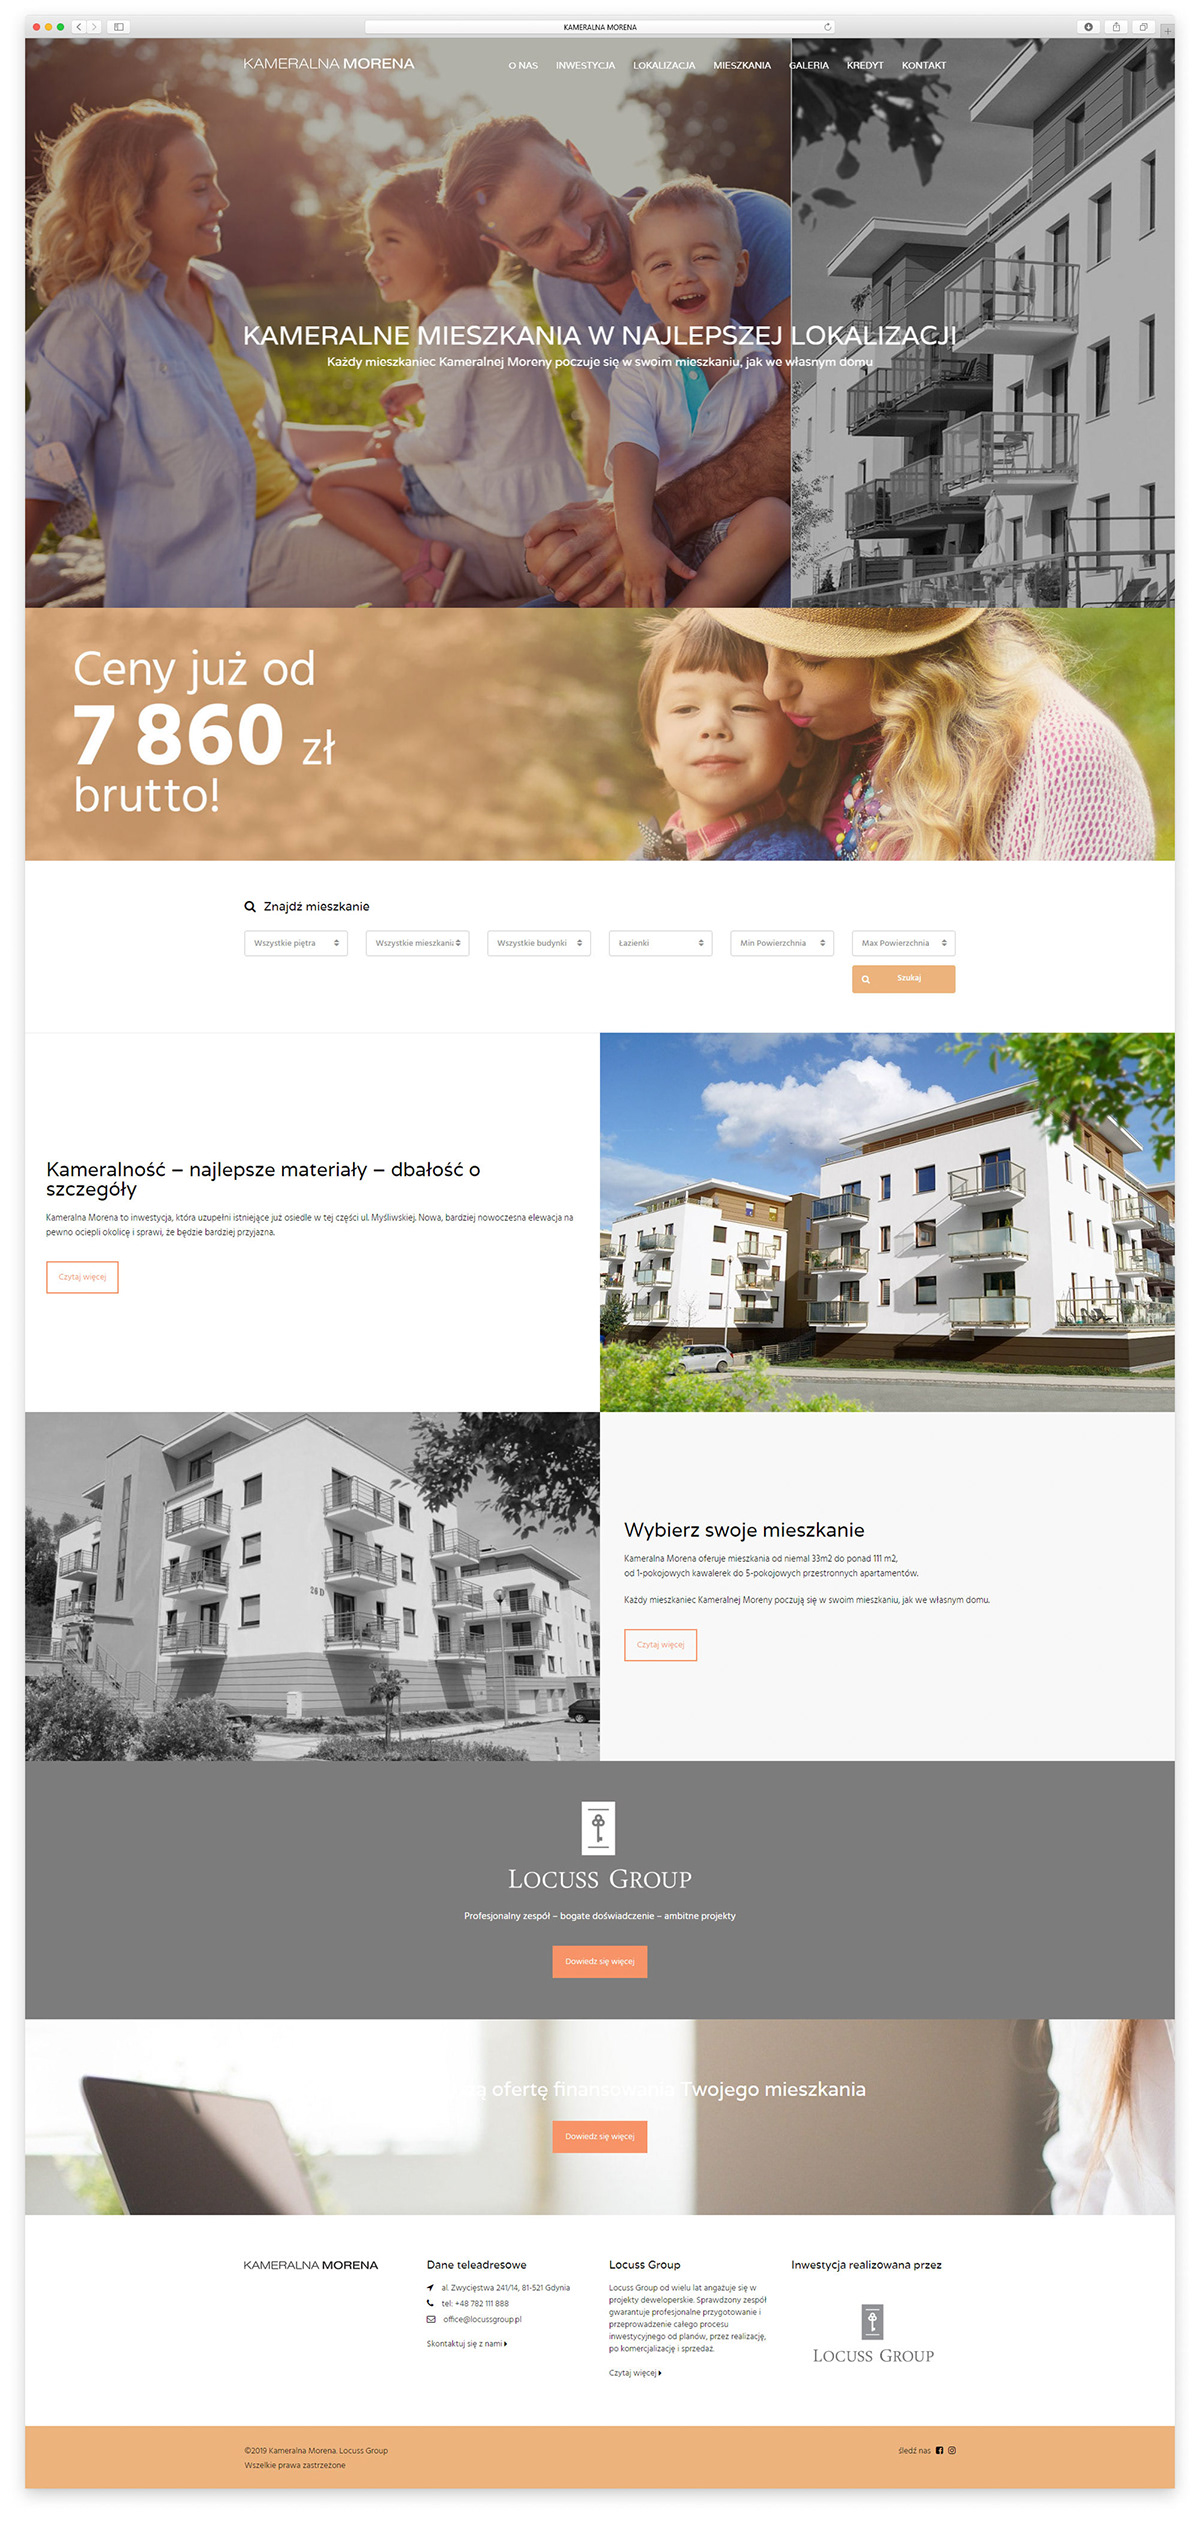 apartamenty deweloper Gdansk inwestycja kameralna morena locuss group mieszkania Morena osiedle